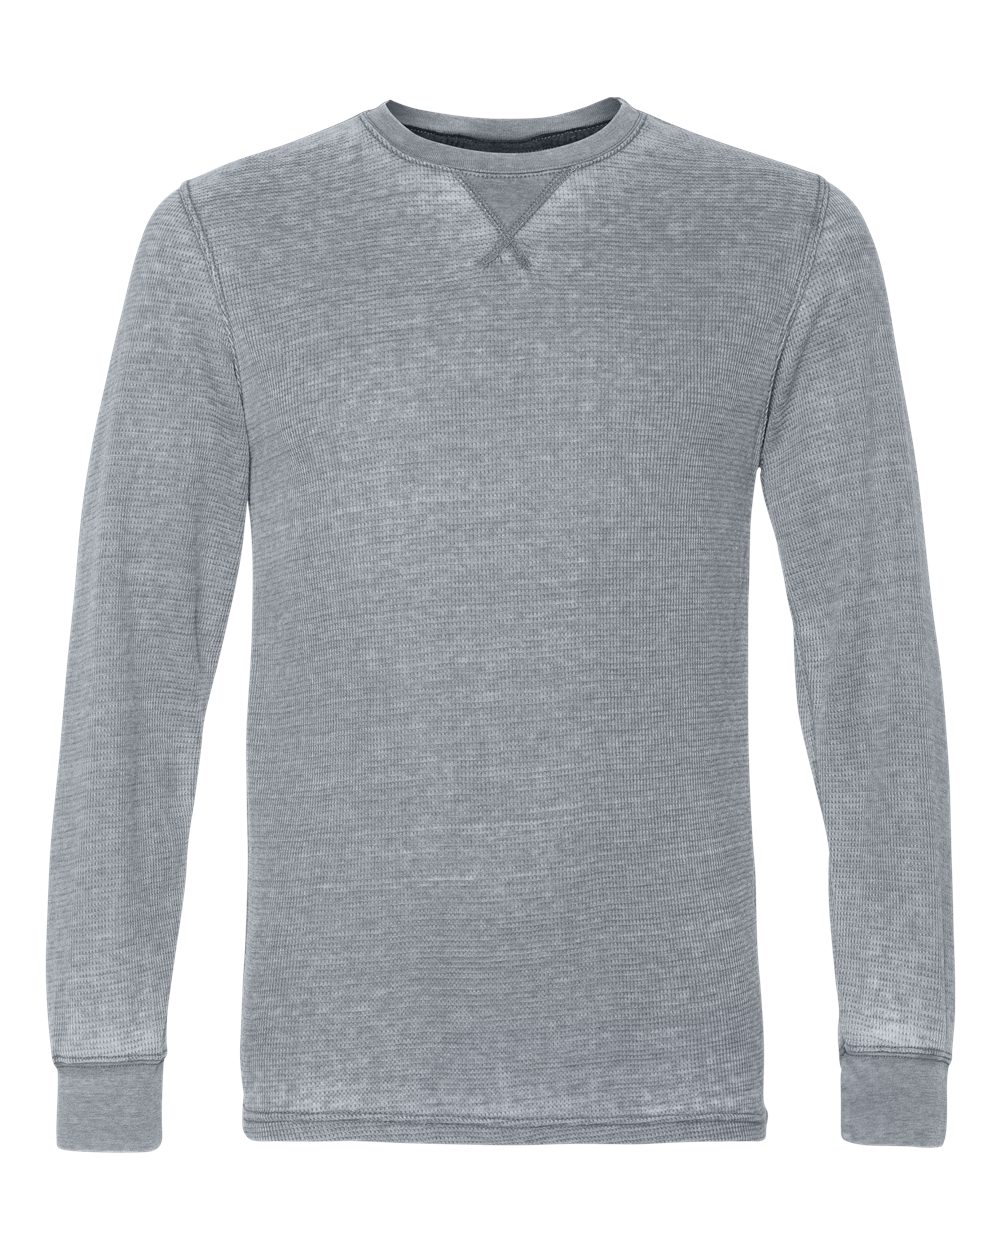 J. America 8241-Vintage Zen Thermal Long Sleeve T-Shirt